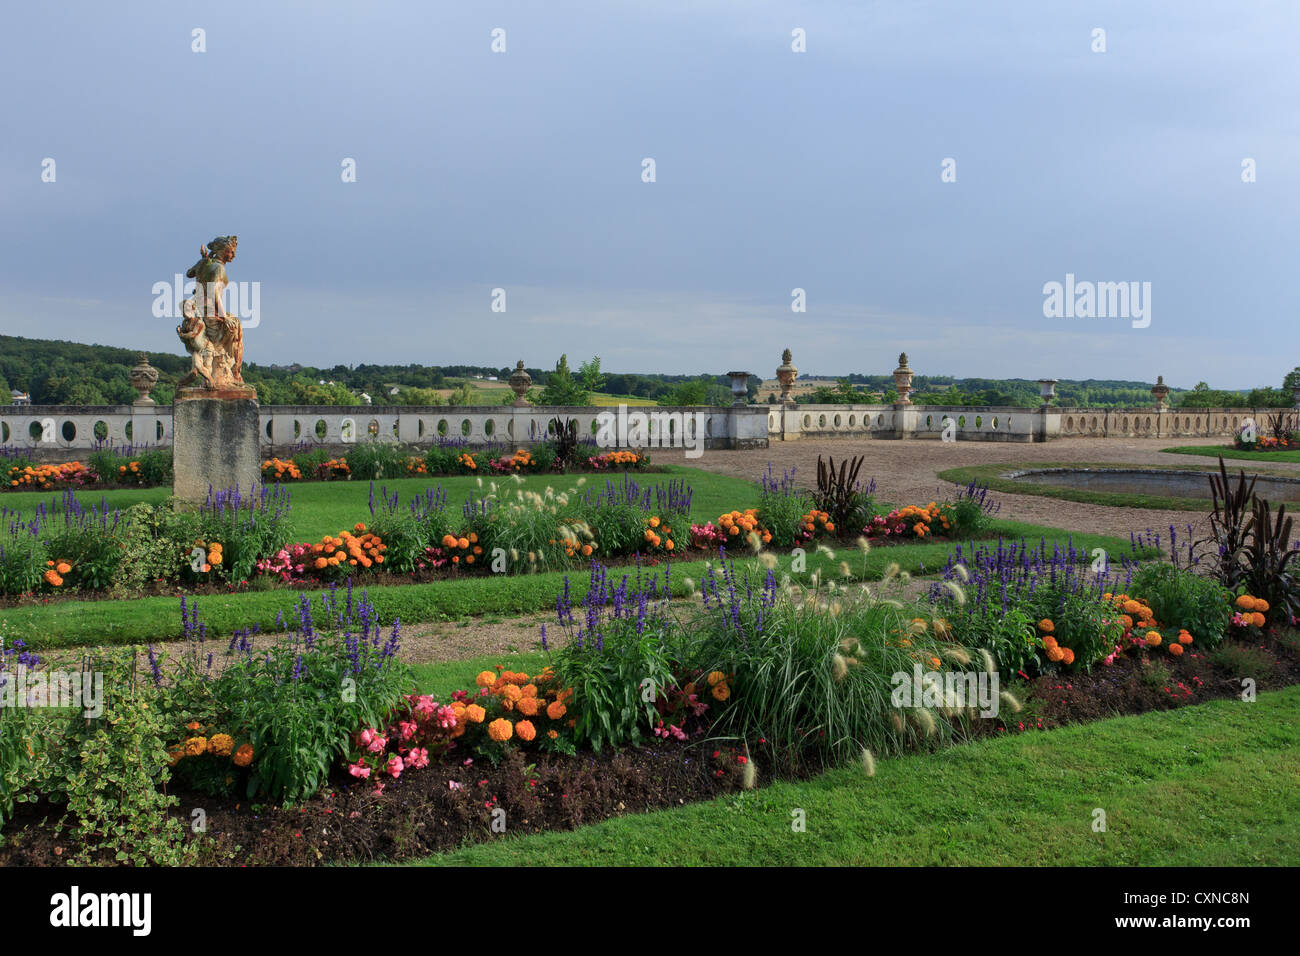 France, Indre, Valençay, the castle, terrace garden Stock Photo